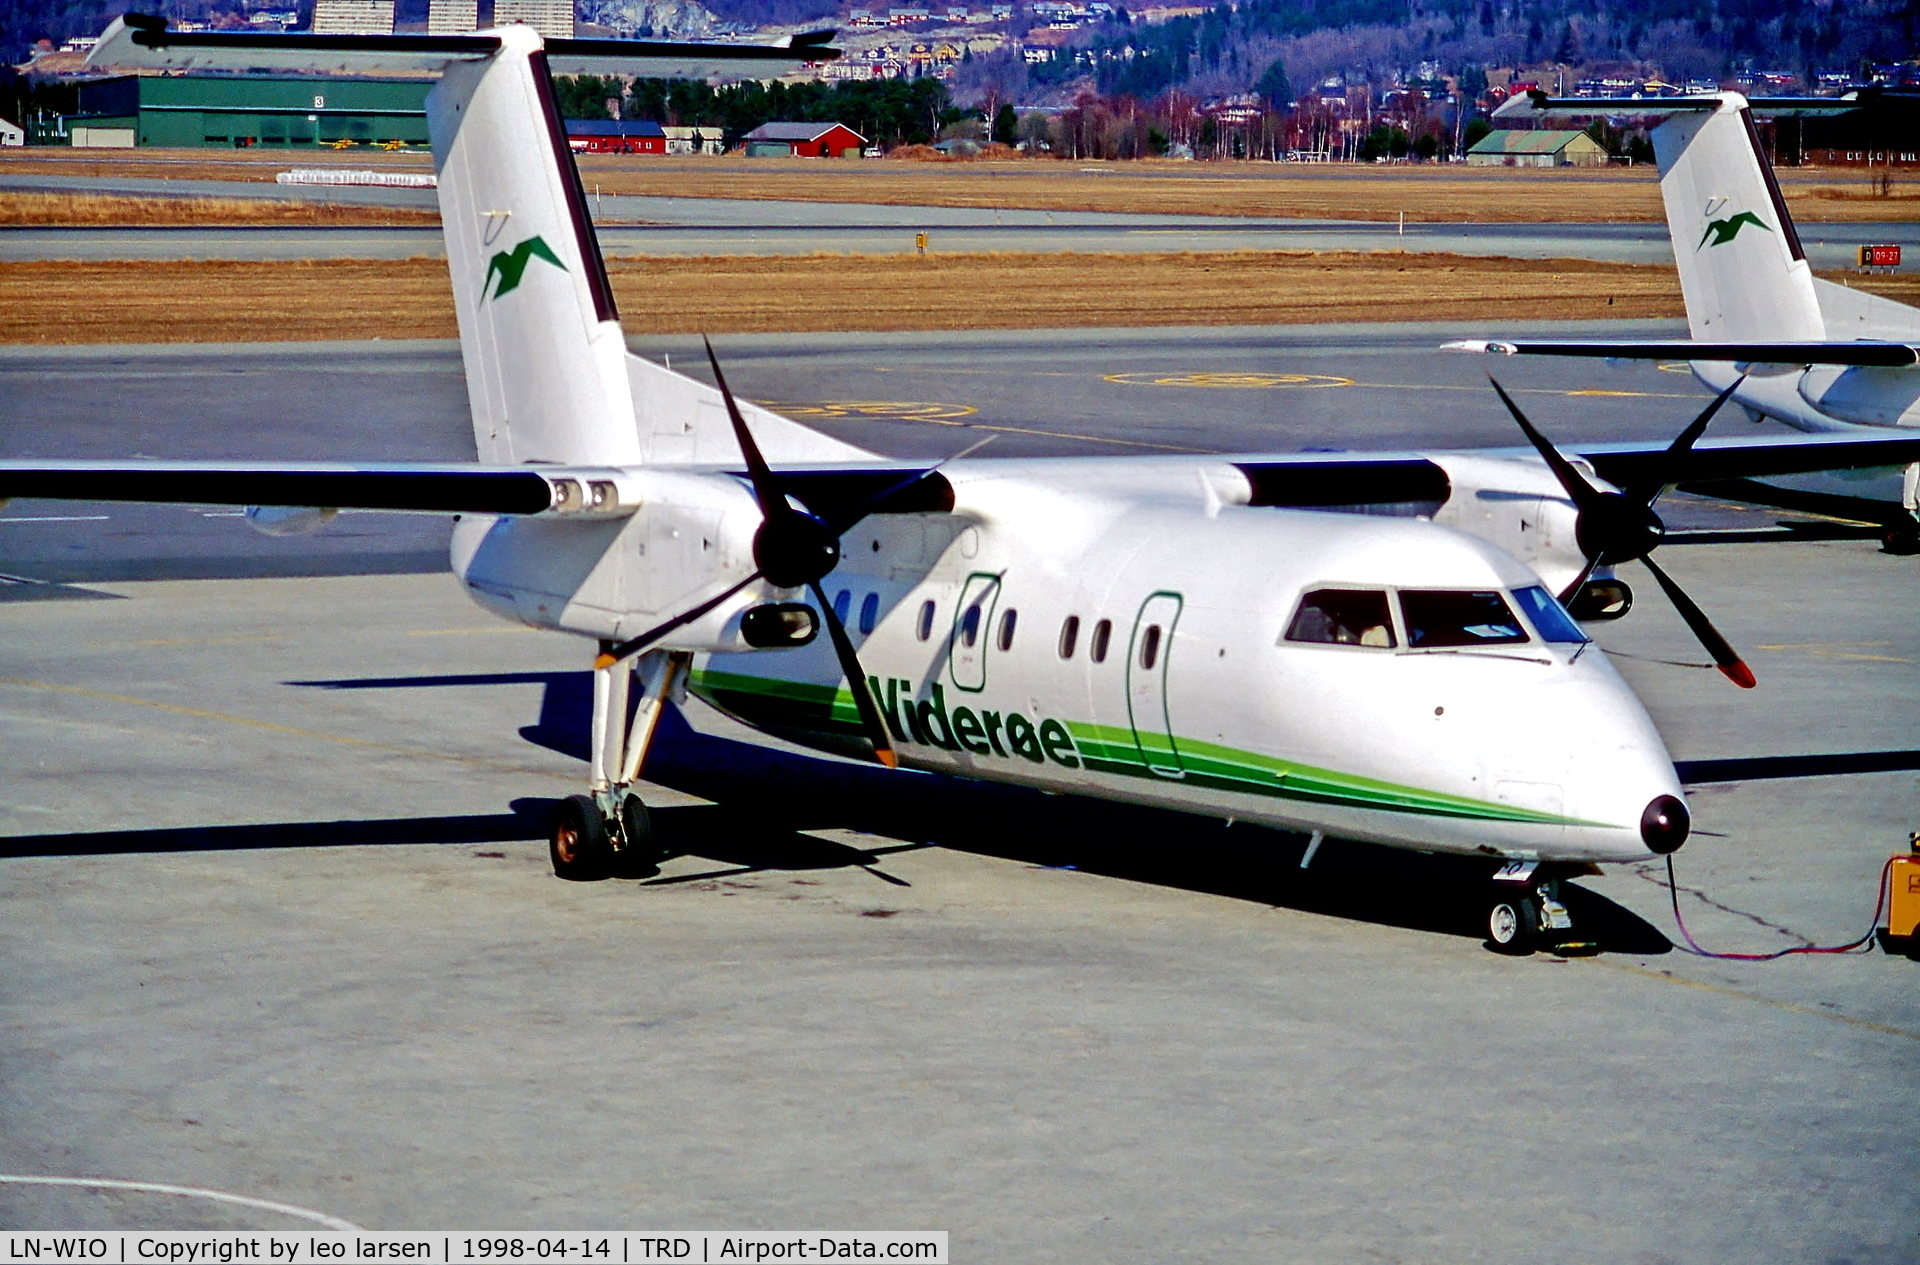 LN-WIO, 1995 De Havilland Canada DHC-8-103B Dash 8 C/N 417, TRD Trondheim 14.4.98